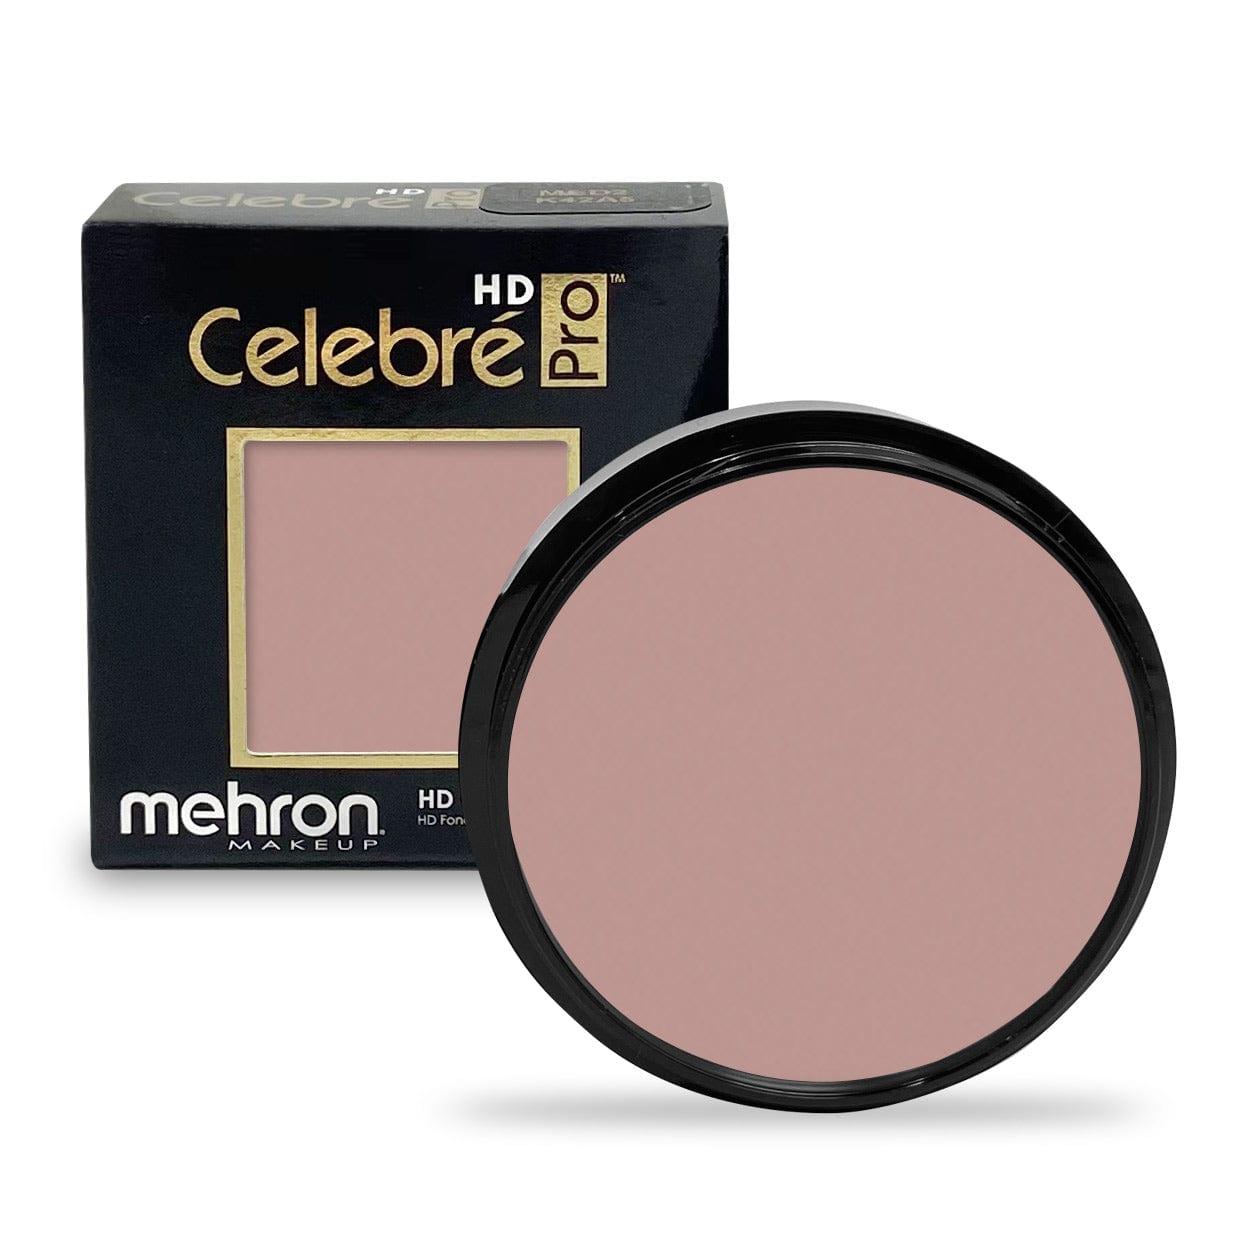 Mehron Celebre Pro HD-Cream 25g - TV4 Soft Beige - Mehron